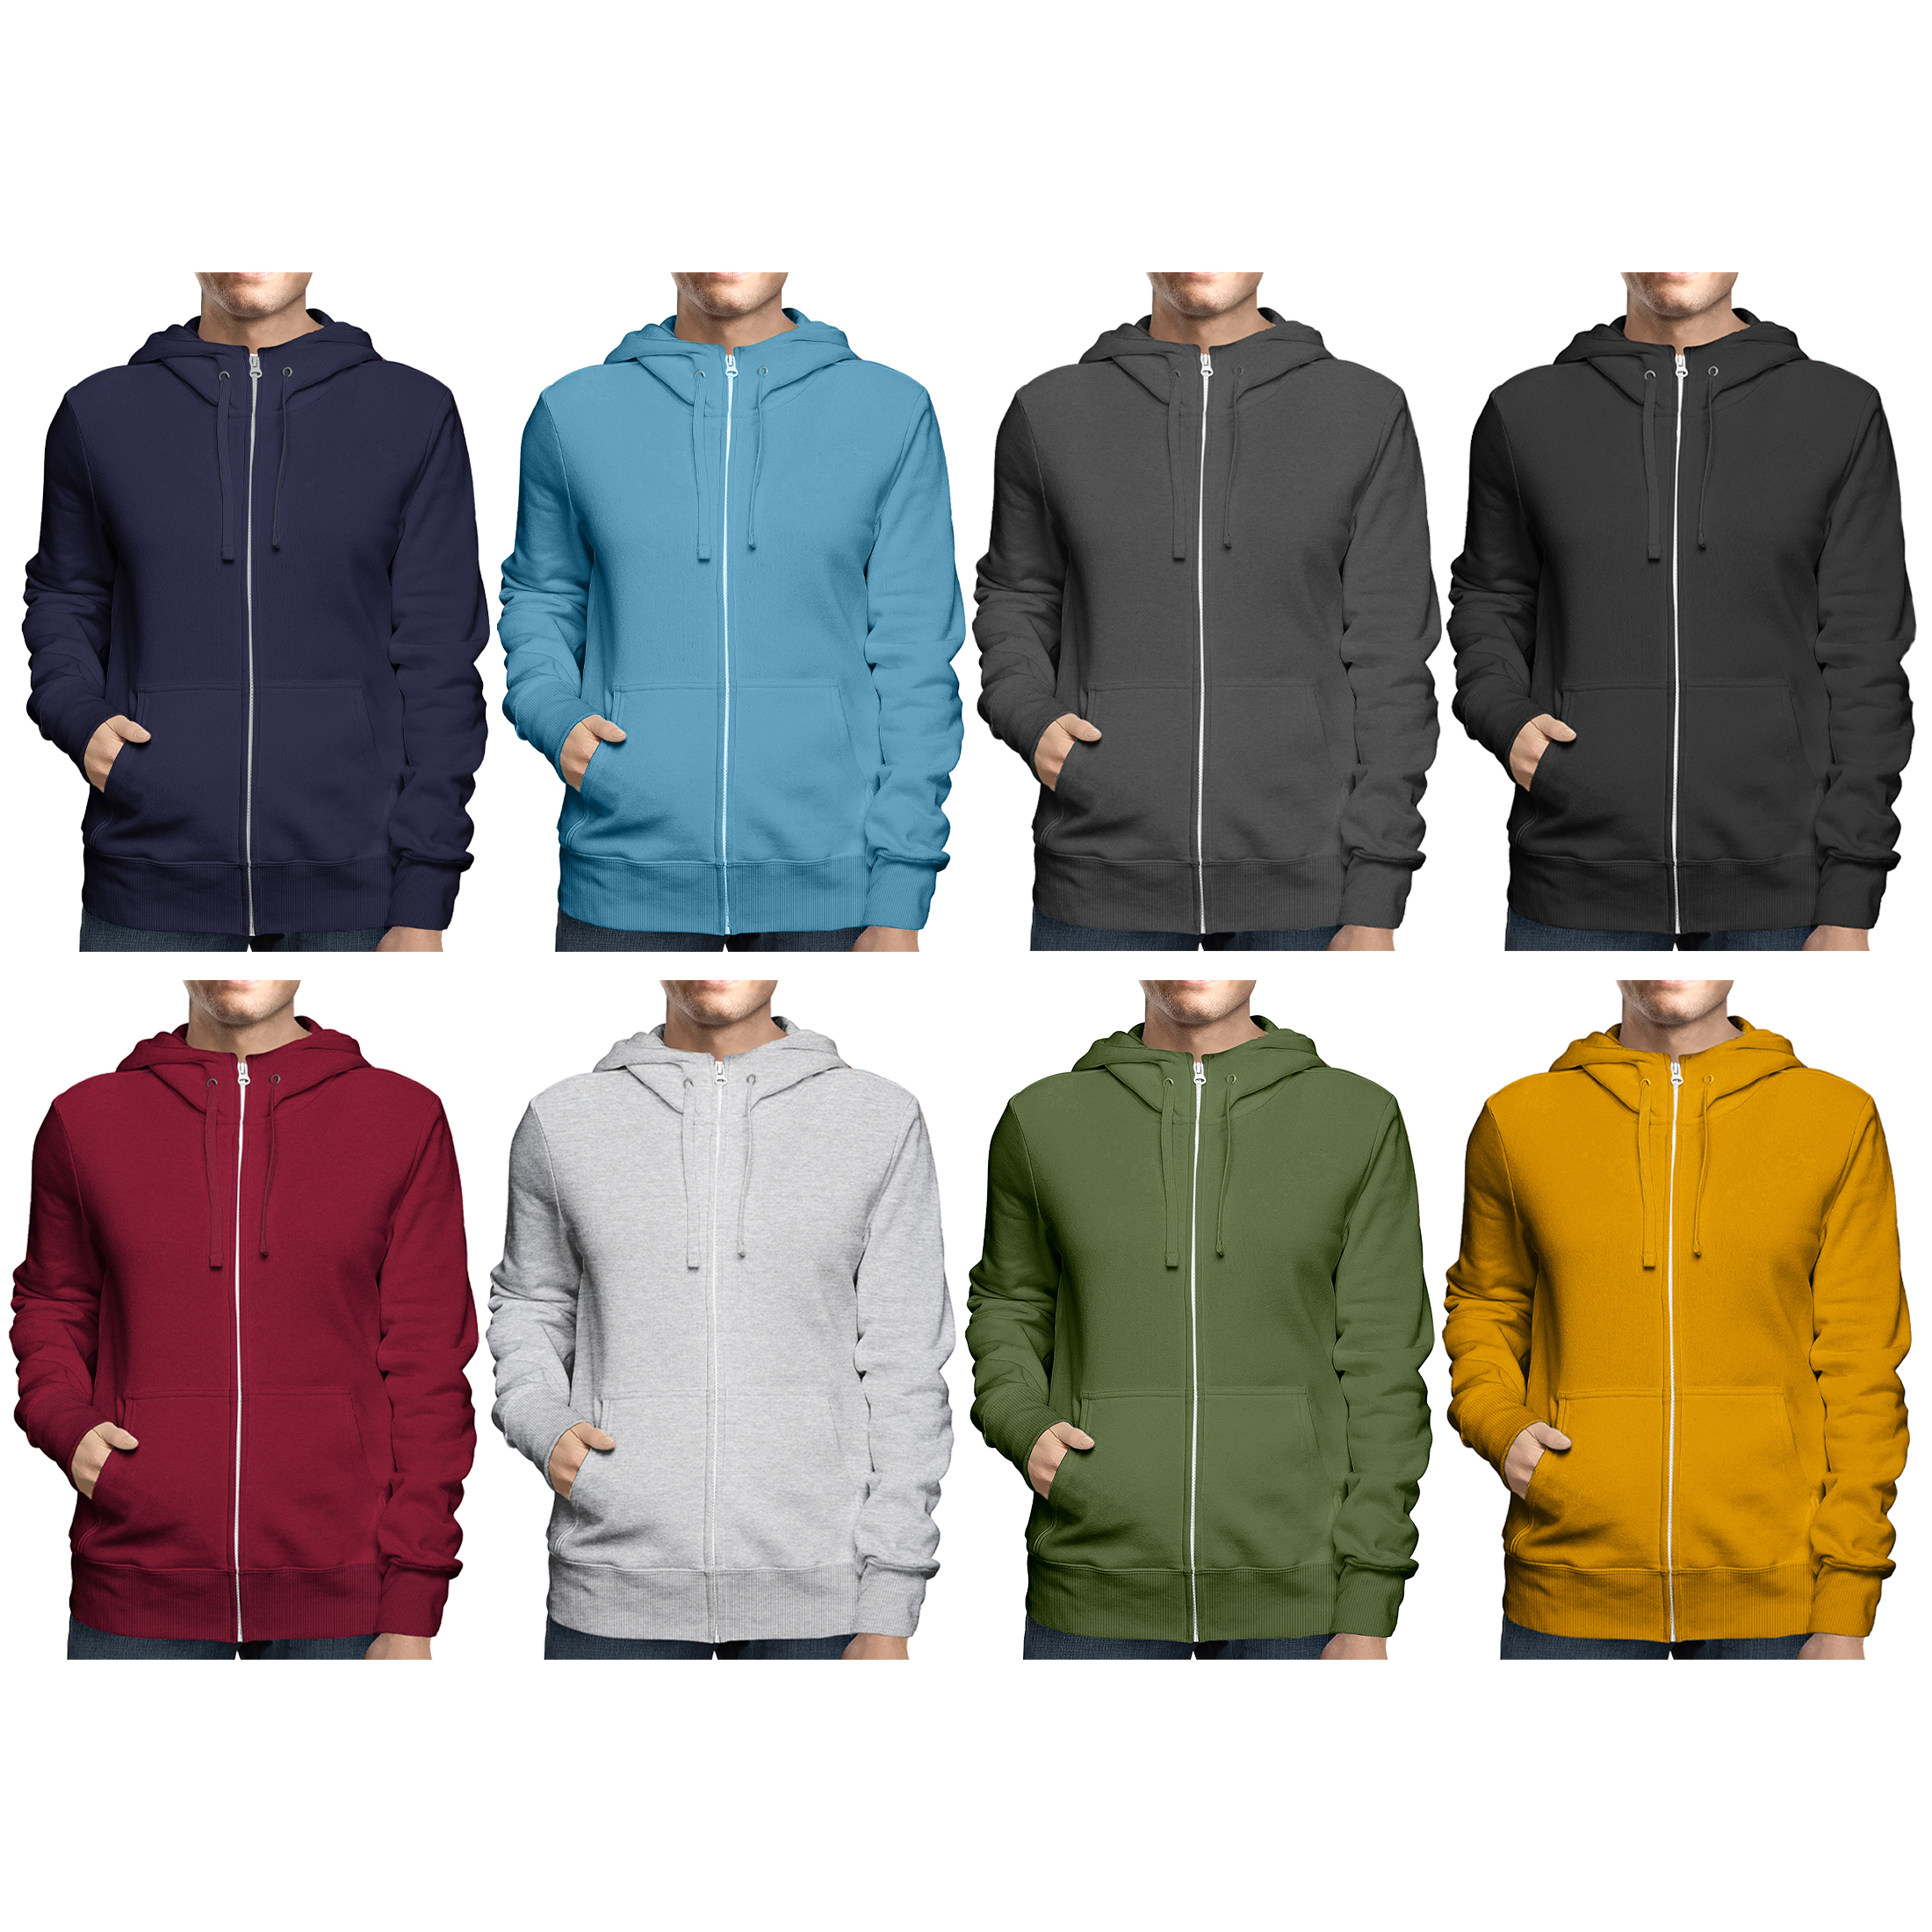 2-Pack: Men's Full Zip Up Fleece-Lined Hoodie Sweatshirt (Big & Tall Size Available) - Black & Burgundy, Medium